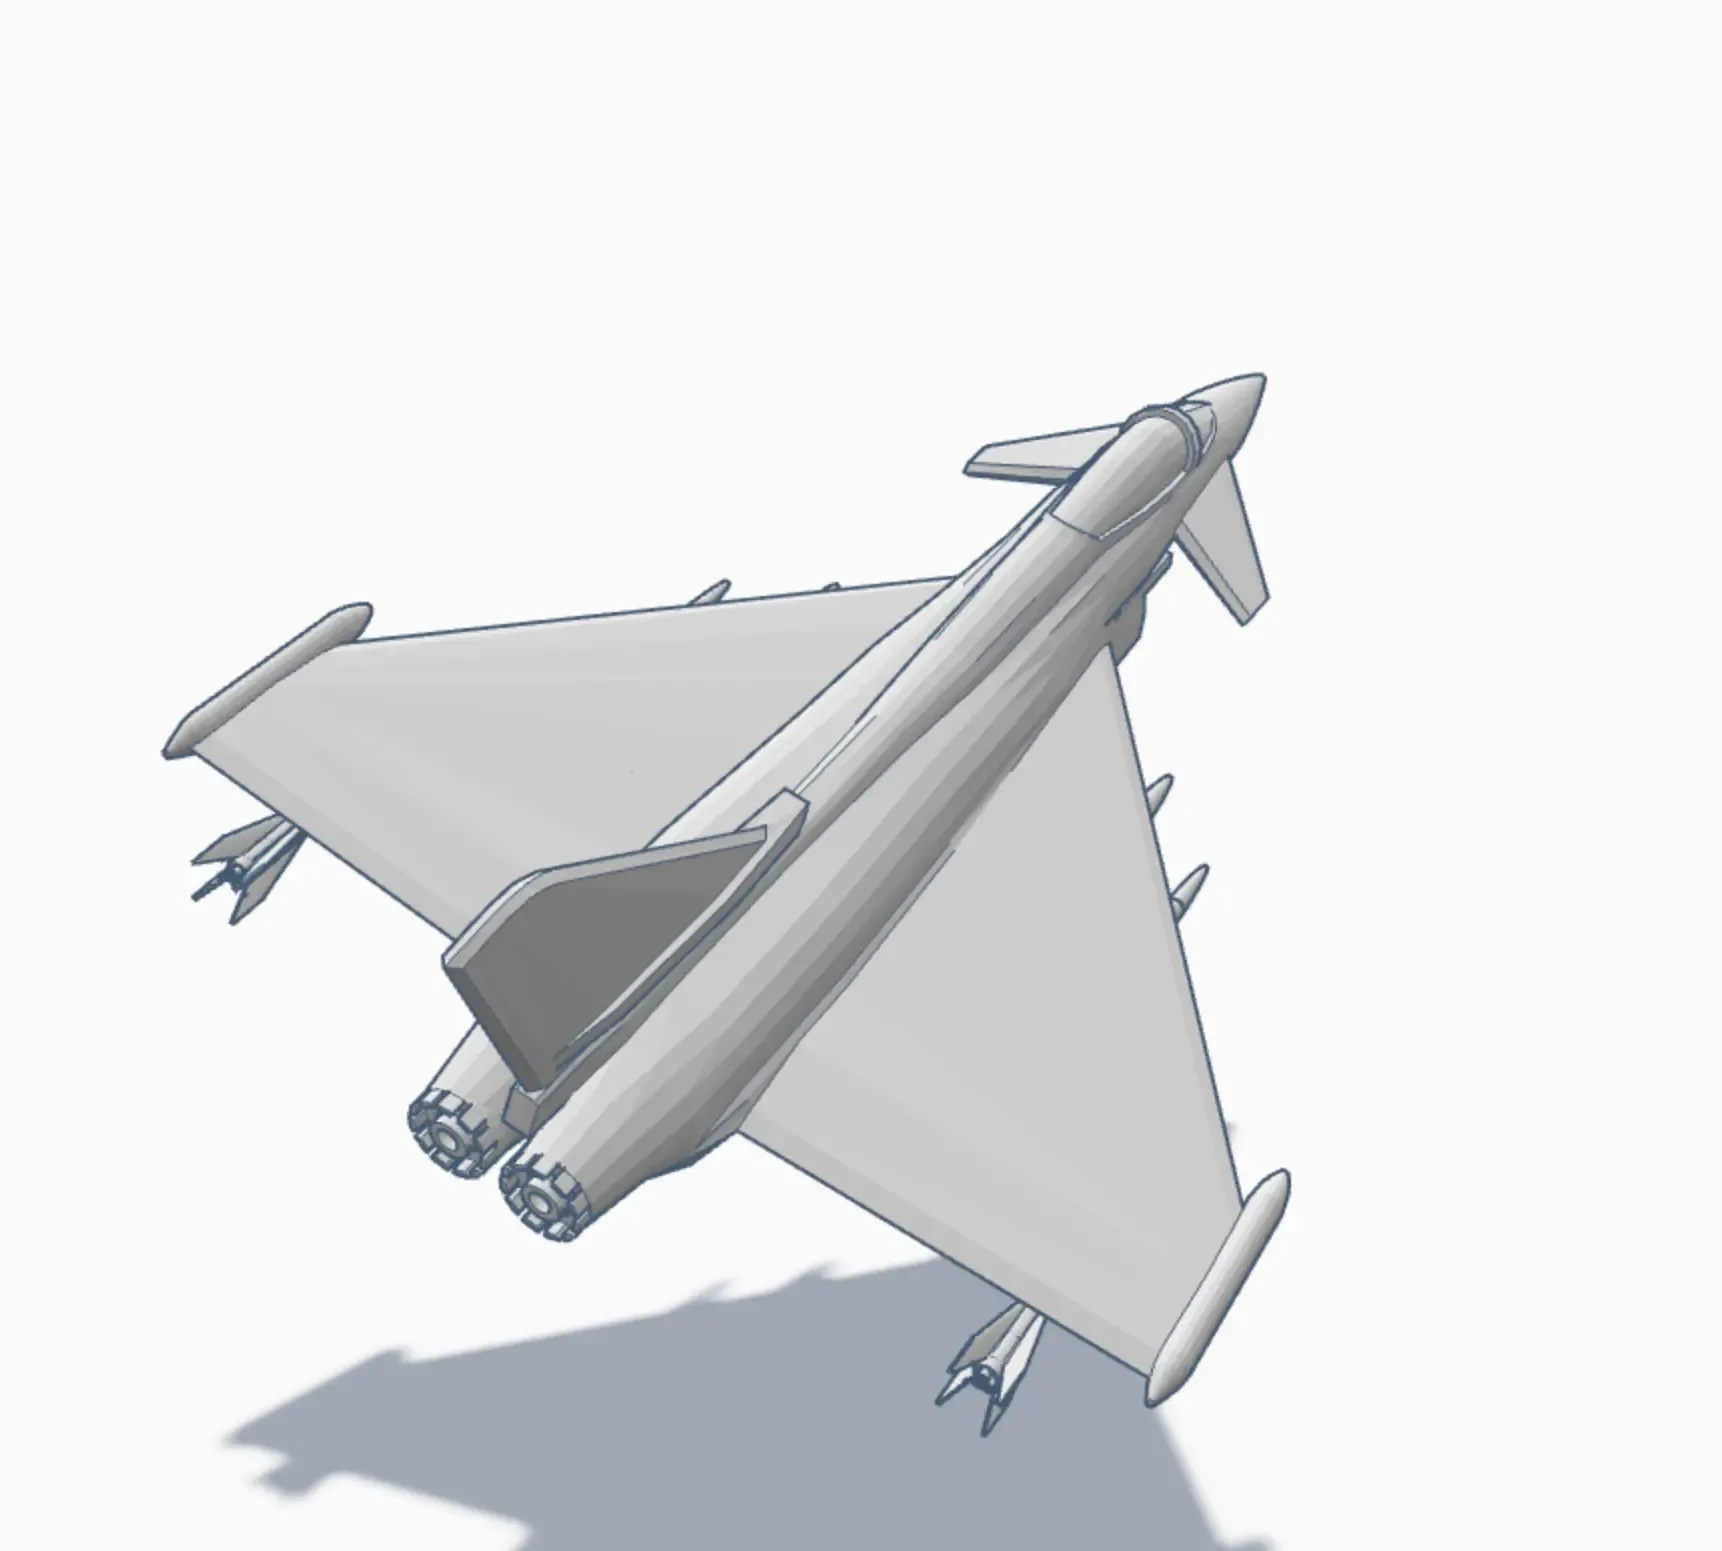 Eurofighter Typhoon *Supersonic multi-role warplane*